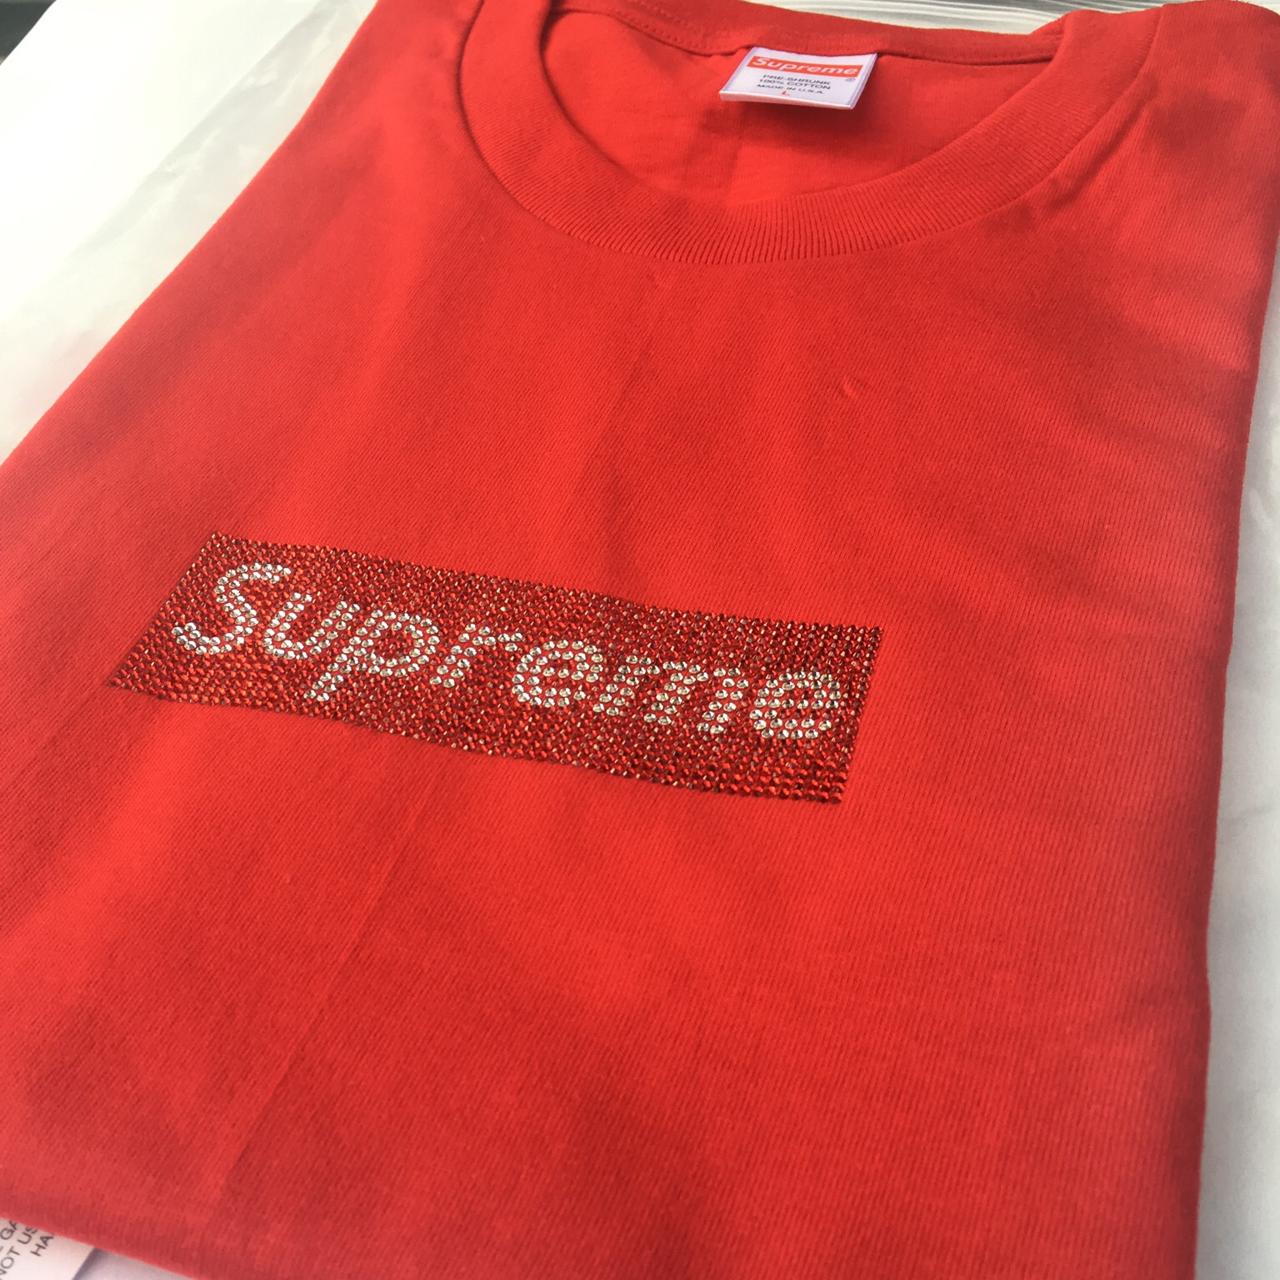 logo supreme shirt red